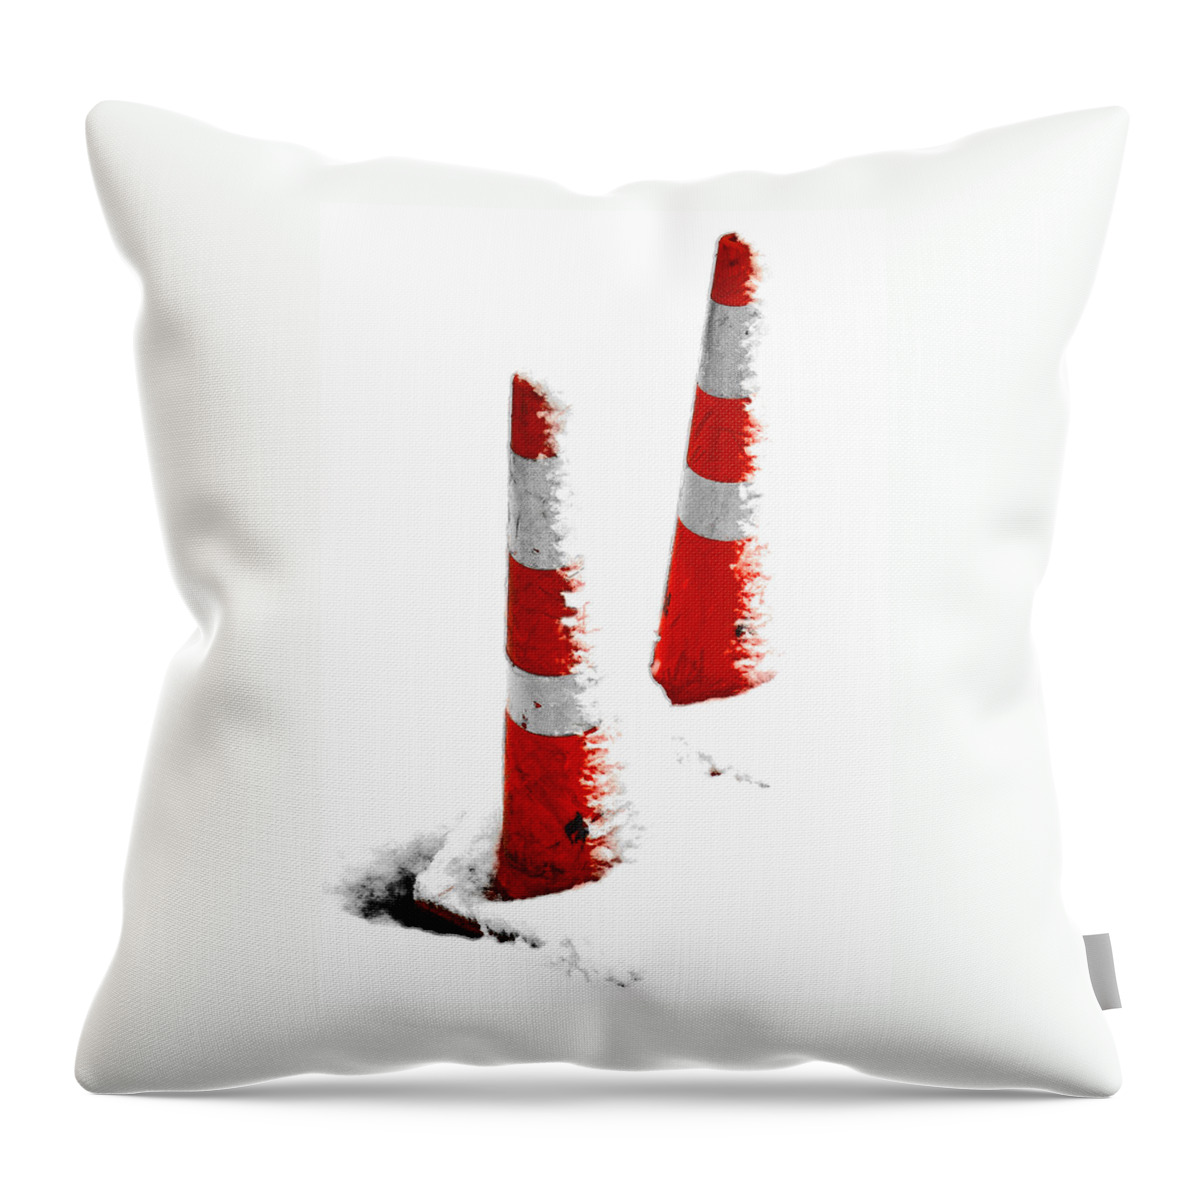 Orange Throw Pillow featuring the digital art Orange Snow Cones by Steve Taylor